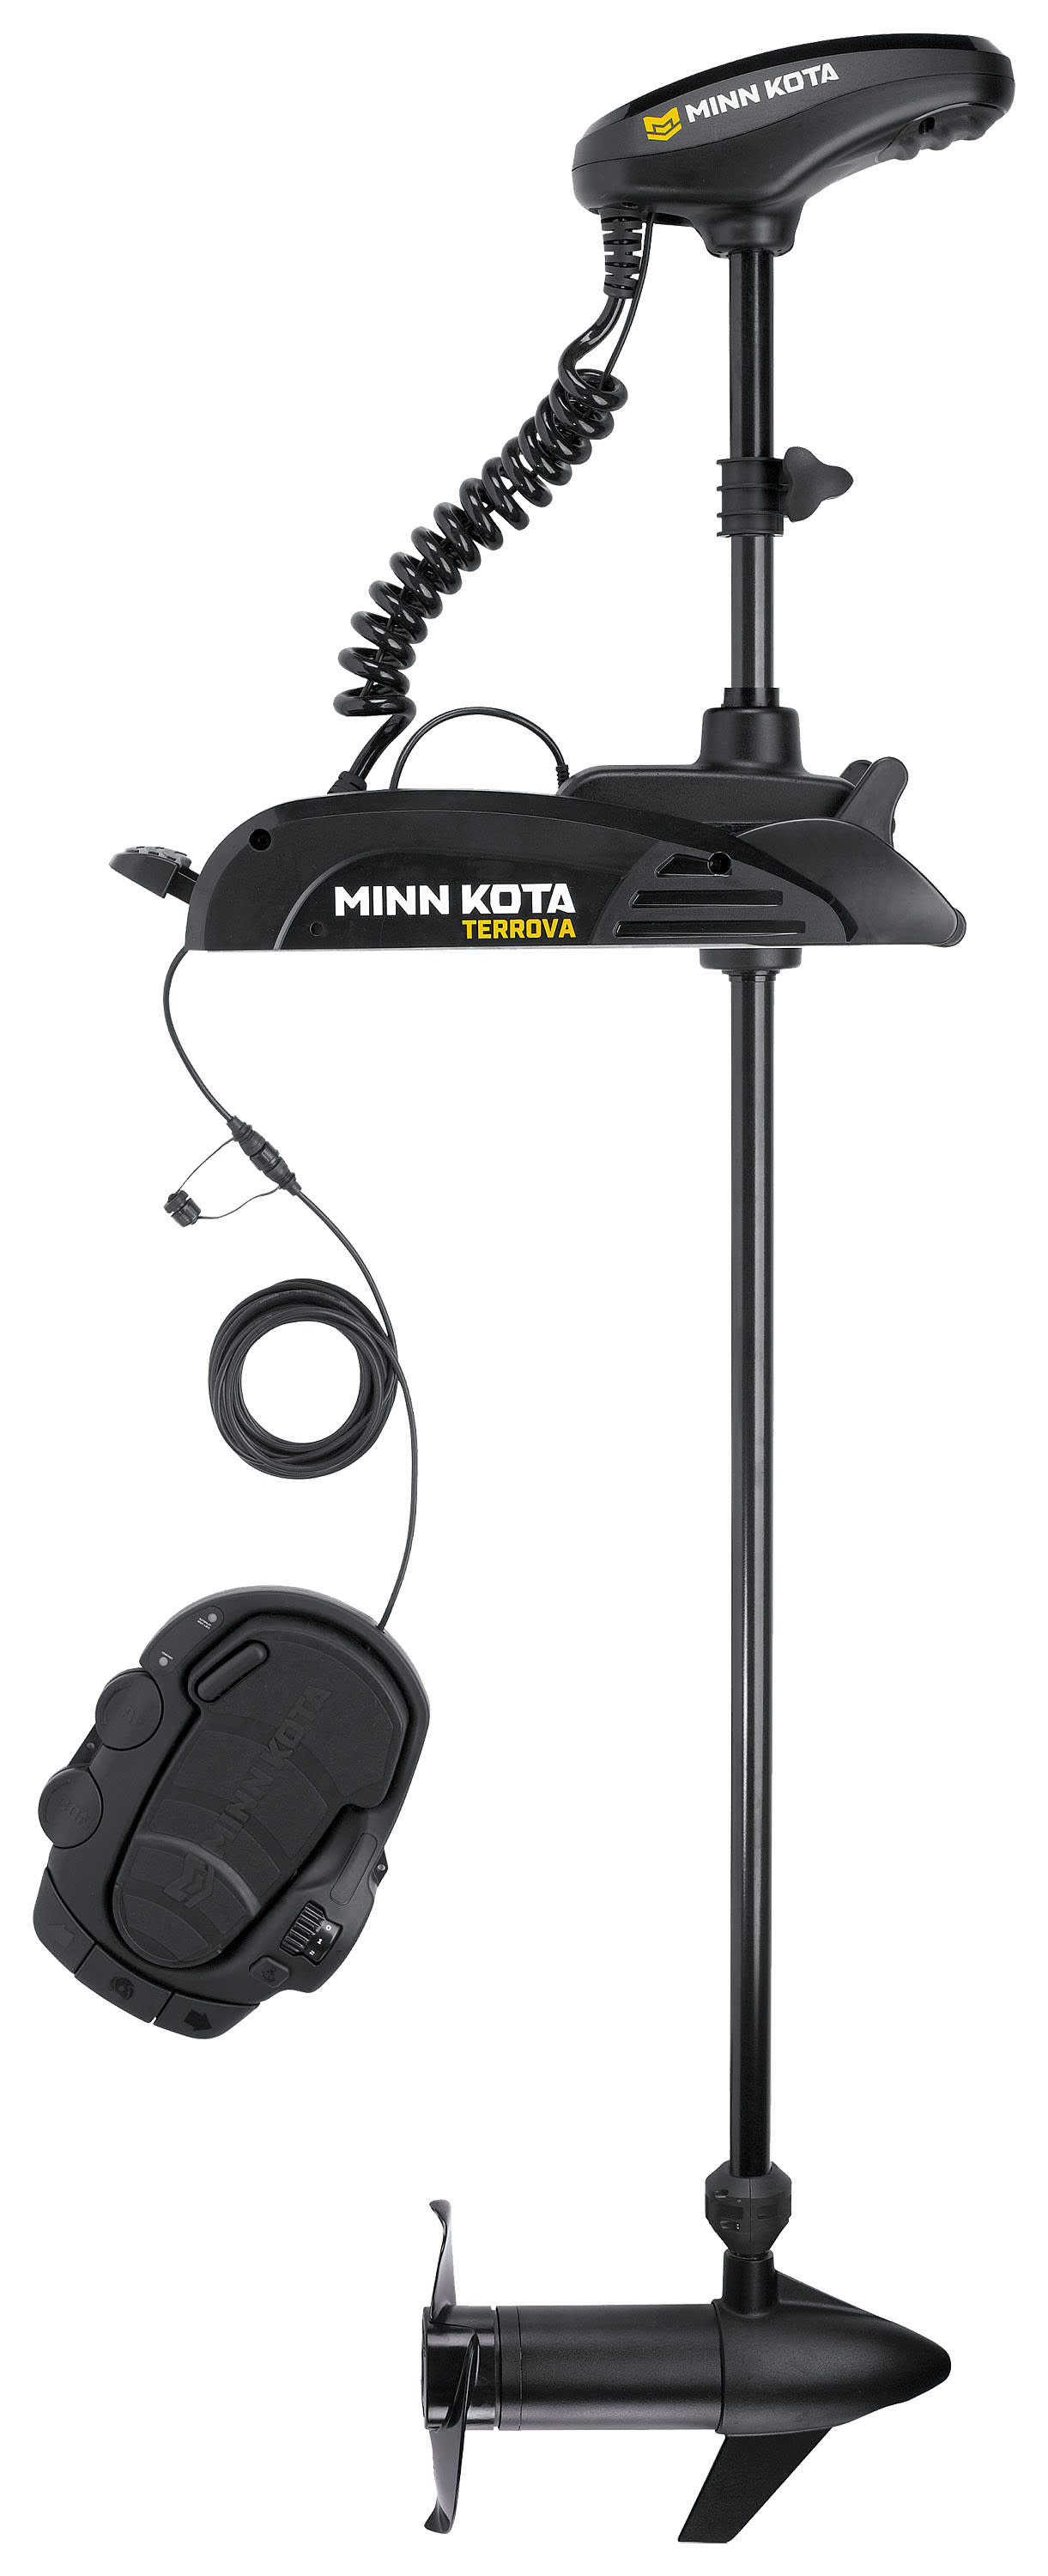 Minn Kota® Terrova® 55lb 54" Freshwater Trolling Motor with Dual Spectrum CHIRP Sonar and Wireless Remote